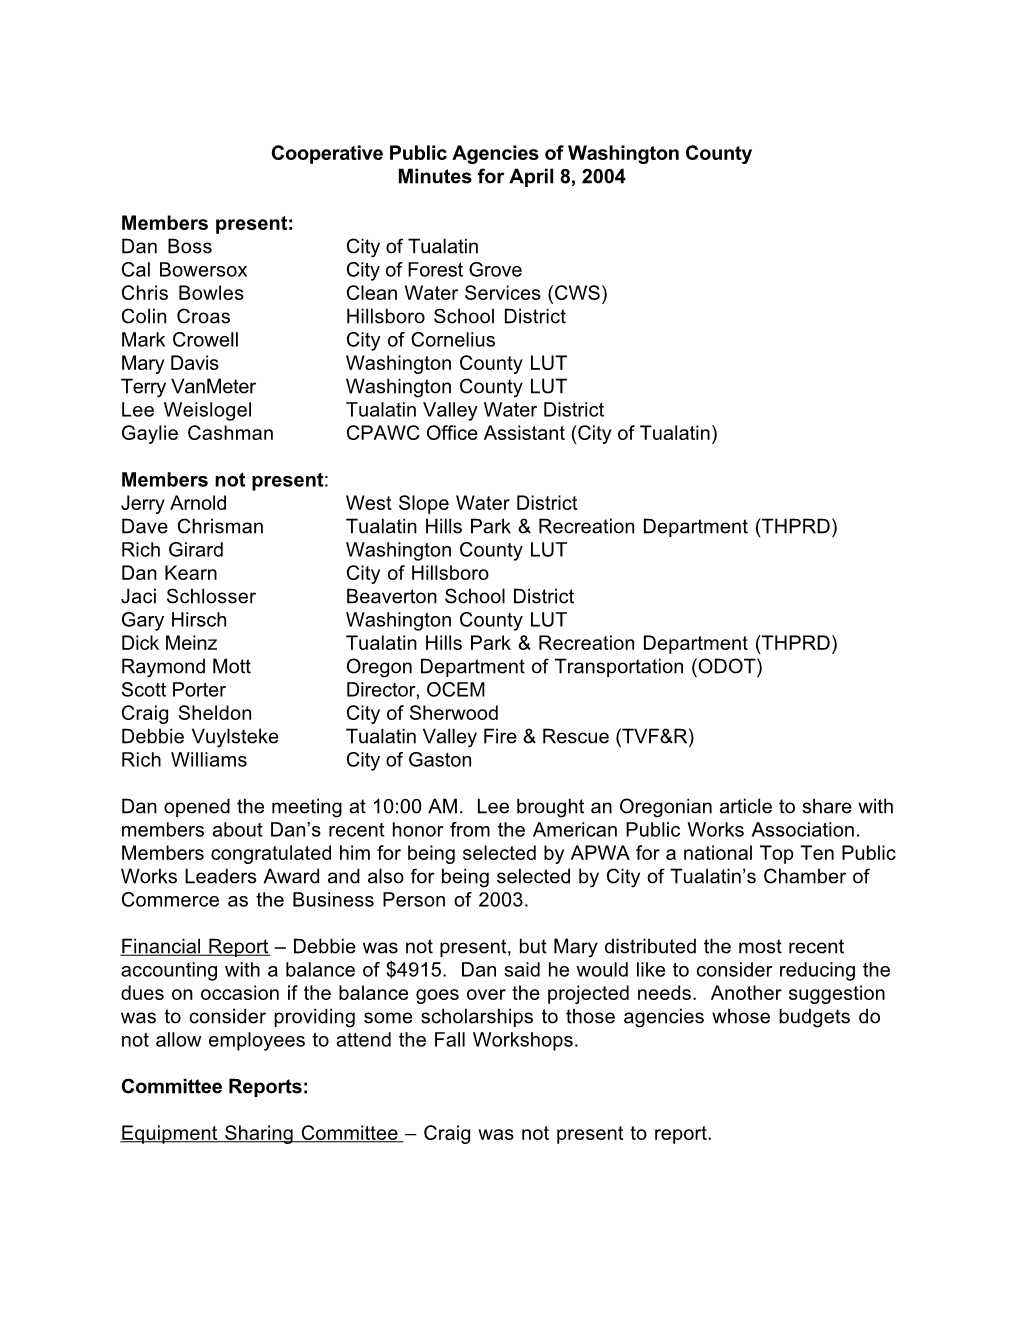 Cooperative Public Agencies of Washington County Minutes for April 8, 2004 Members Present: Dan Boss City of Tualatin Cal Bowers